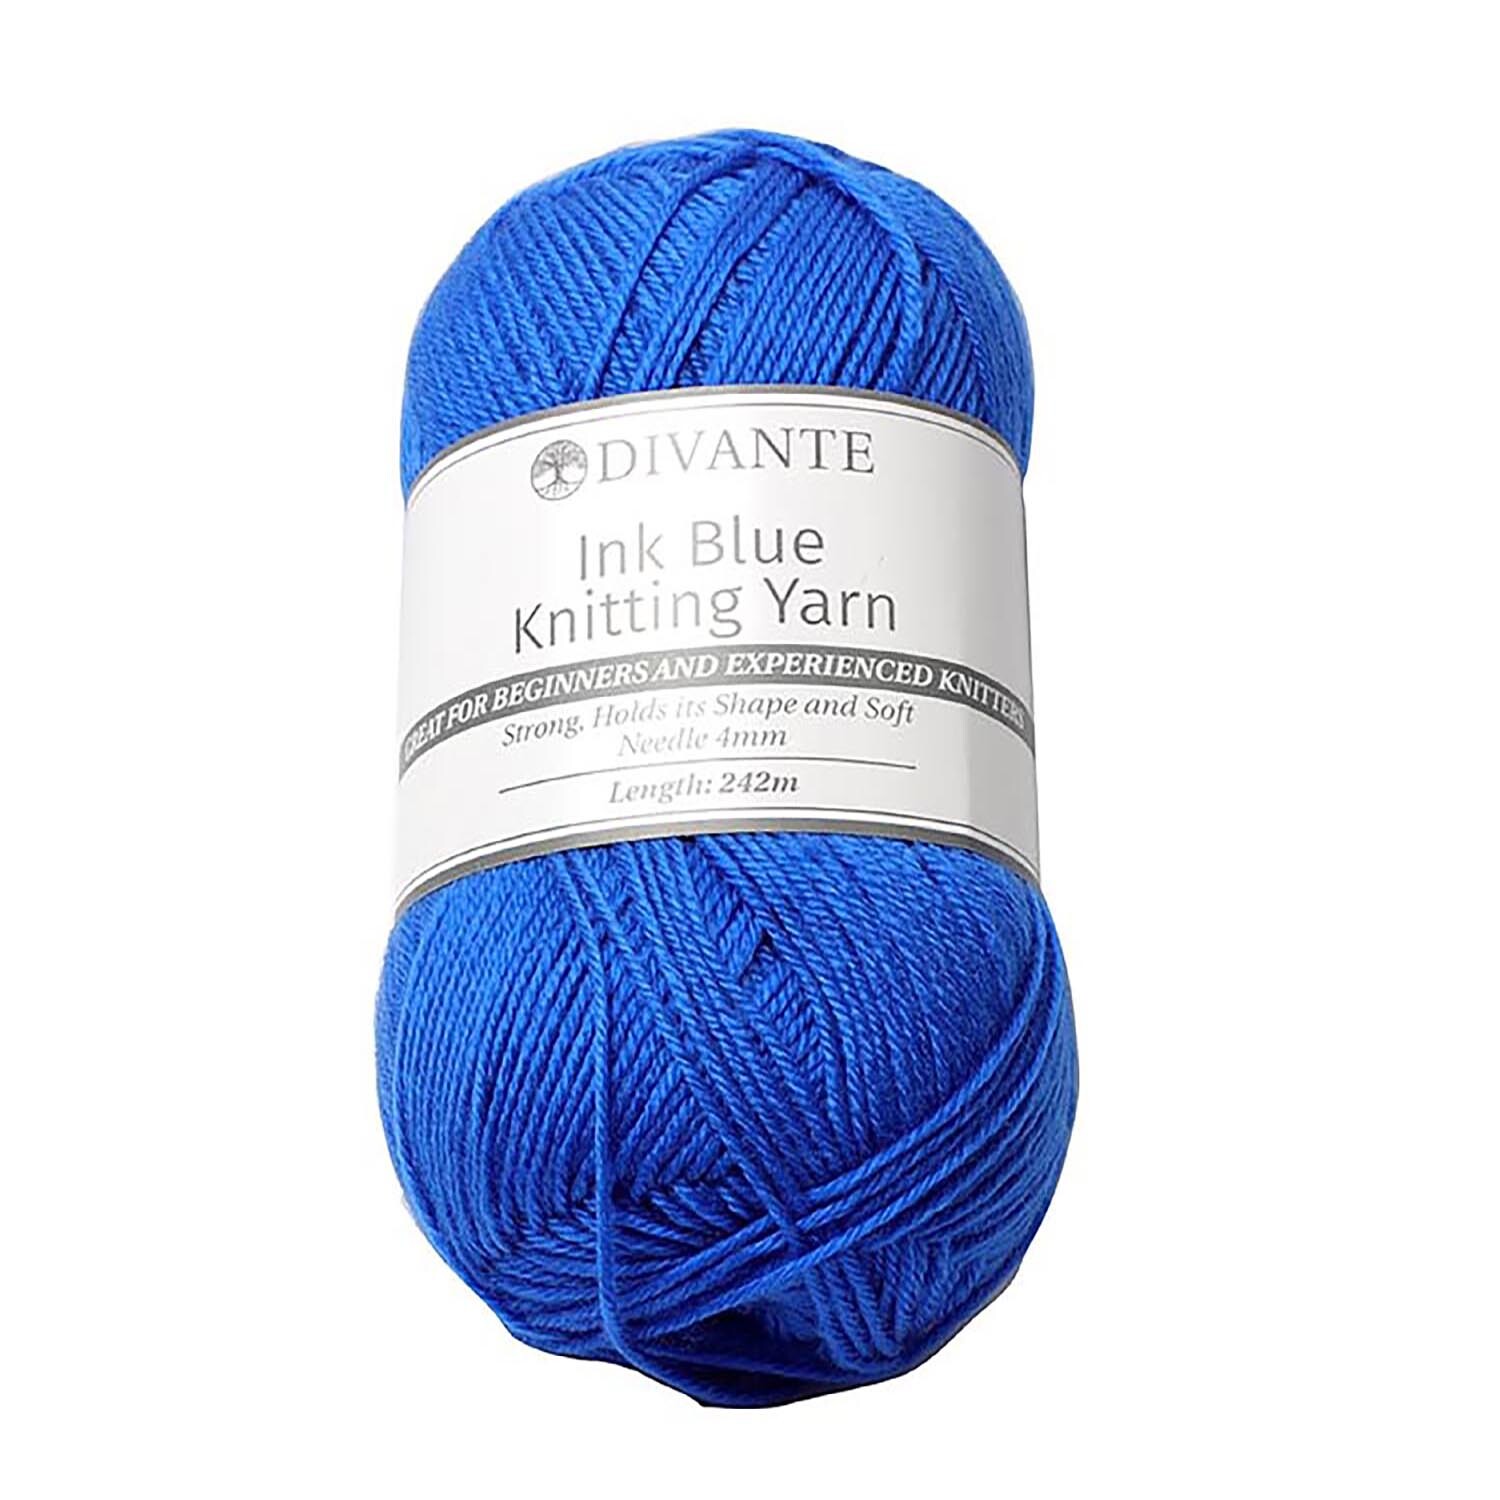 Divante Basic Knitting Yarn - Ink Blue Image